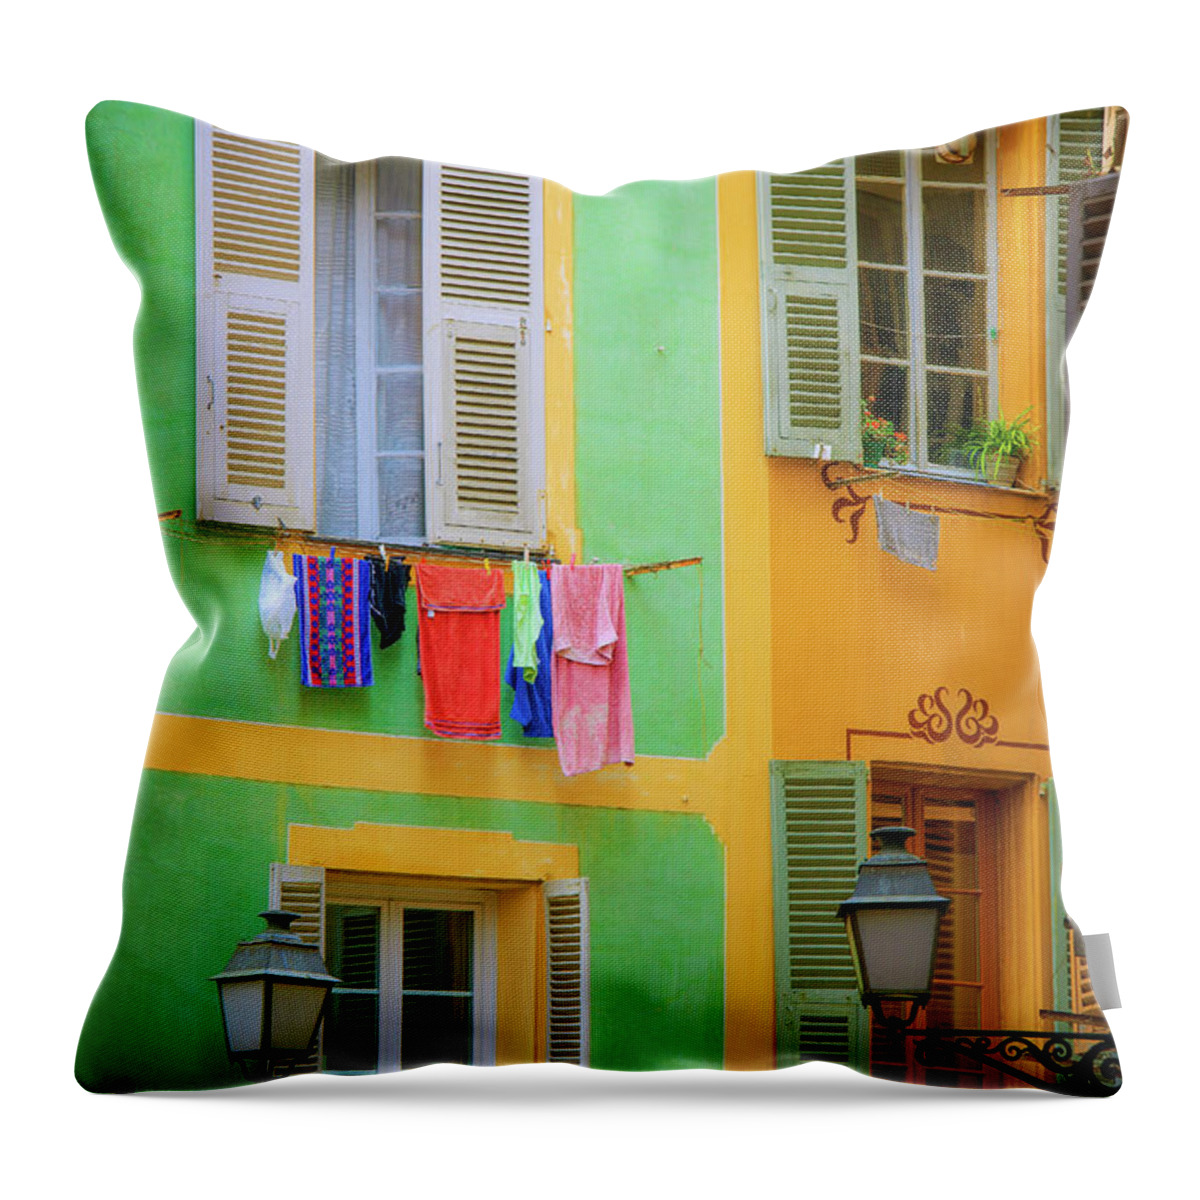 Cote D'azur Throw Pillow featuring the photograph Vieille Ville Windows by Inge Johnsson